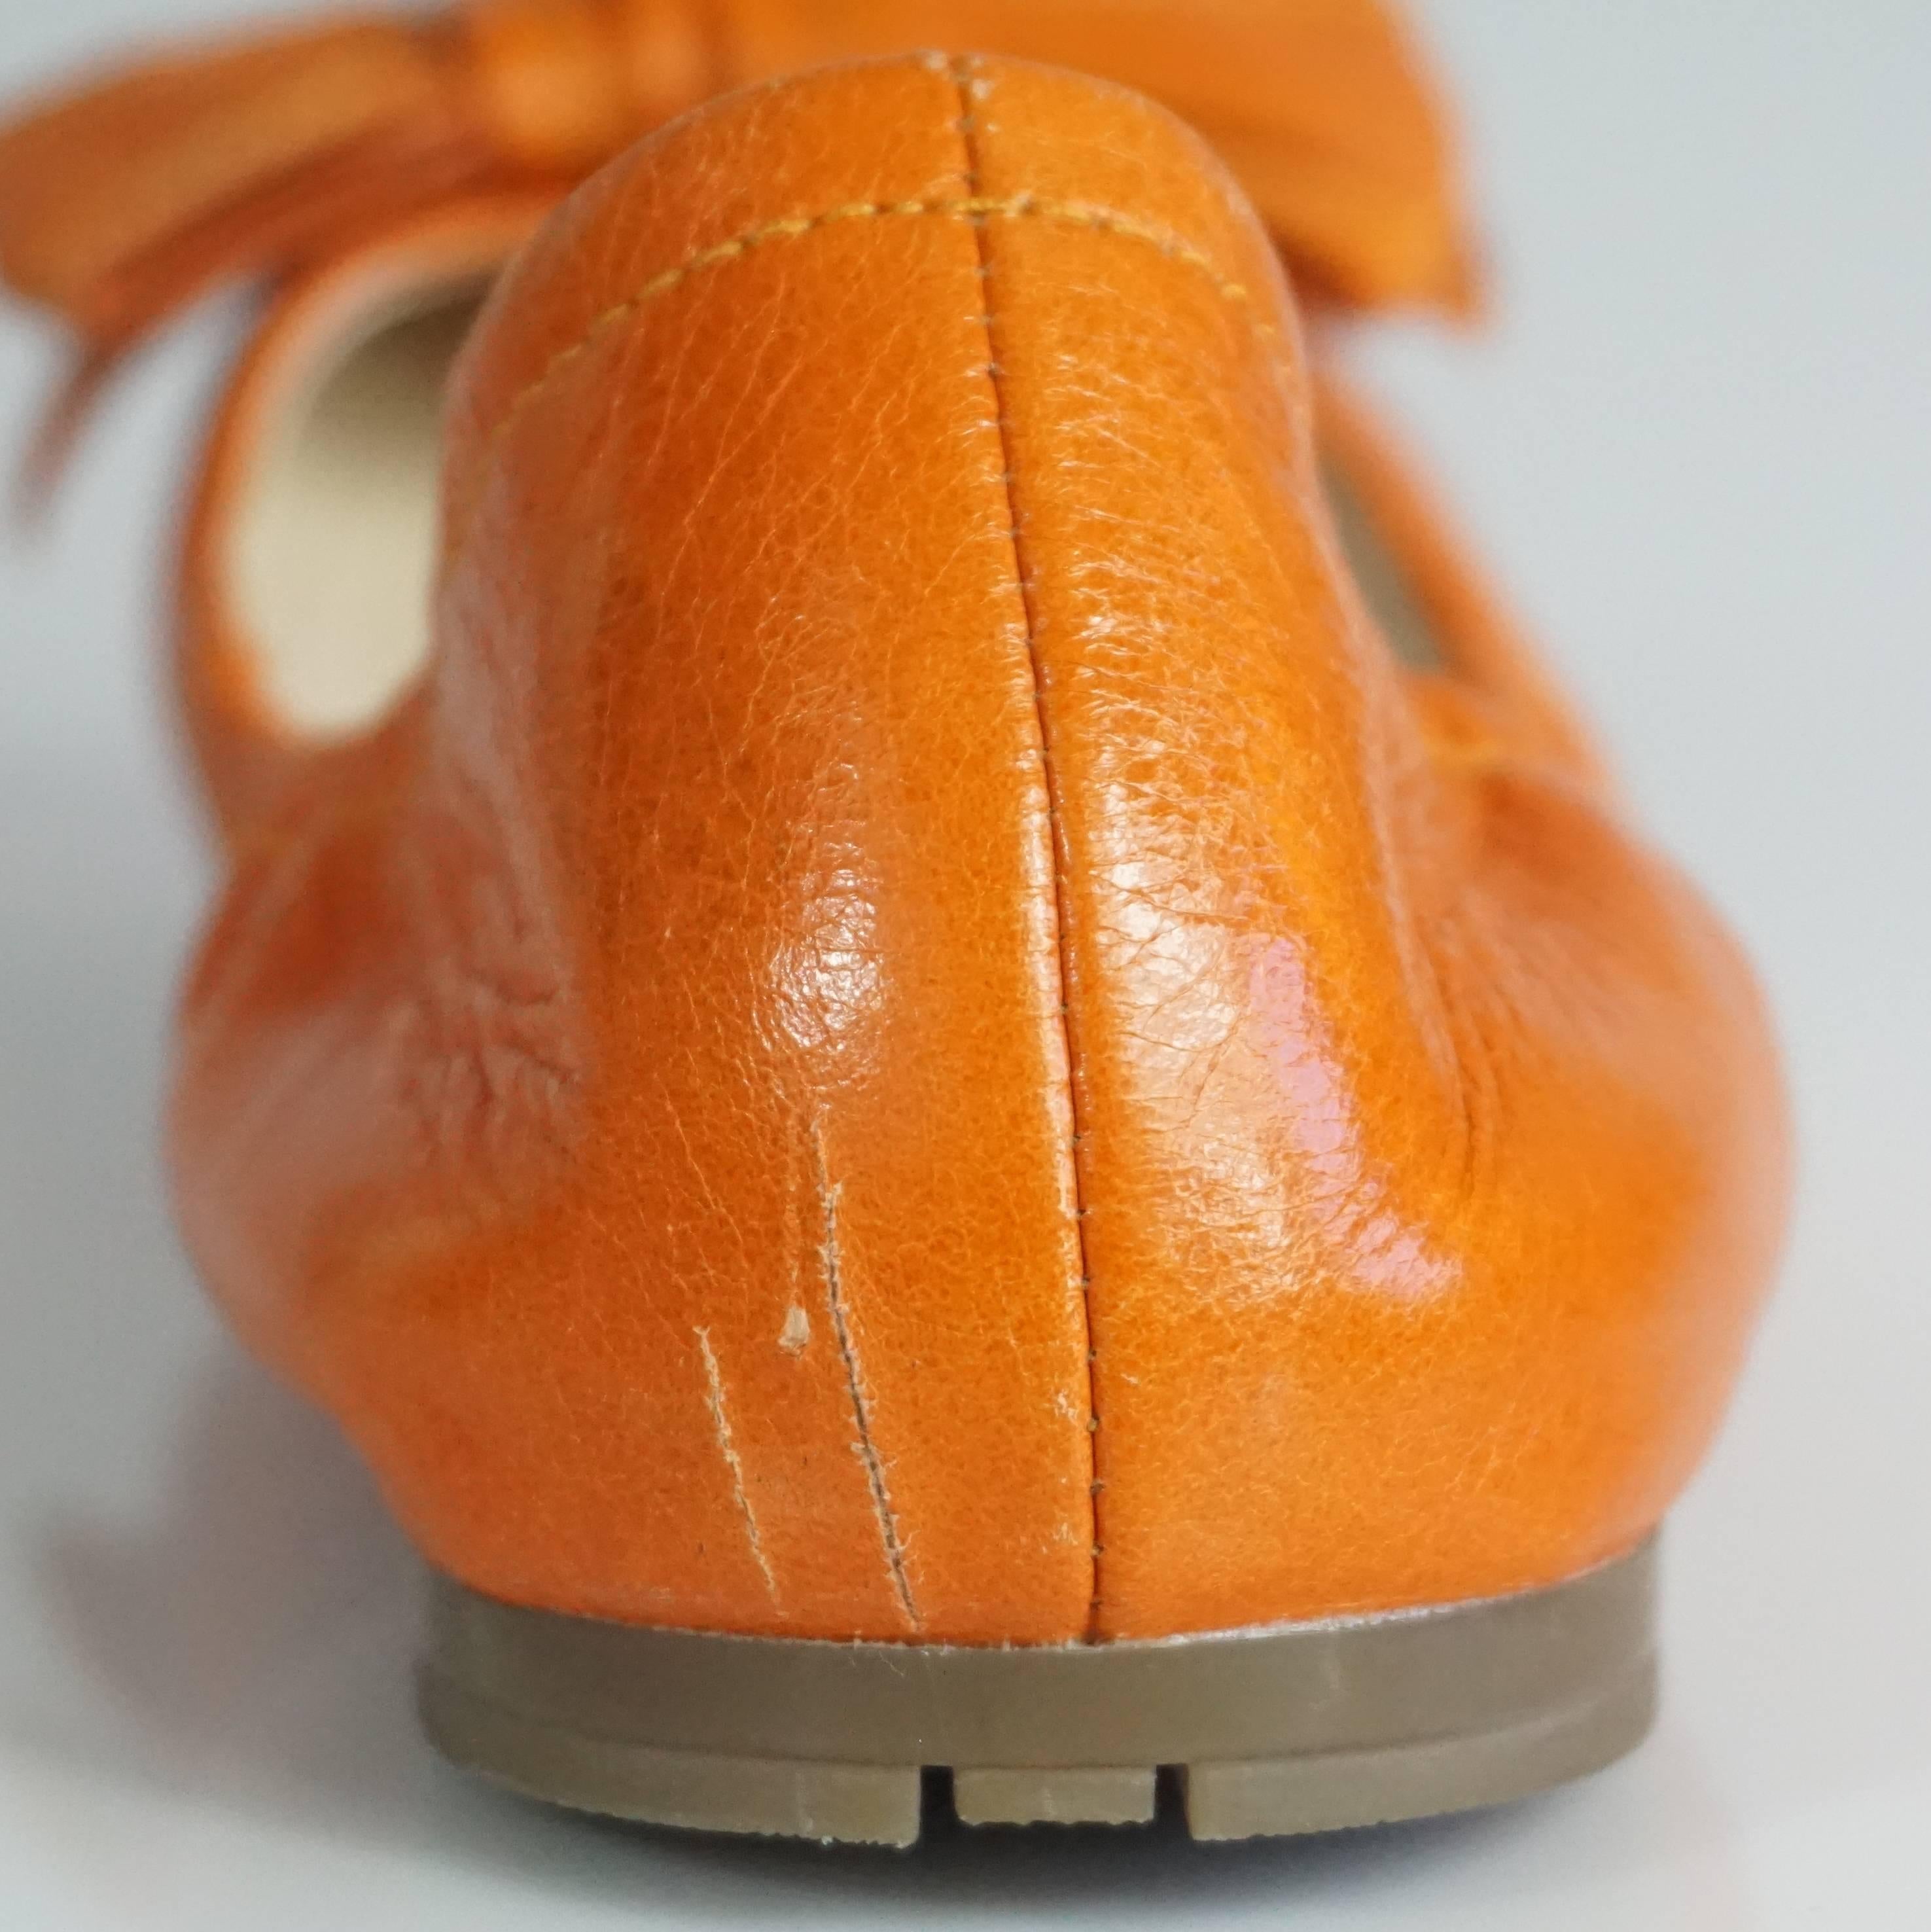 Prada Orange Leather Ballet Flats with Bows - 35 1